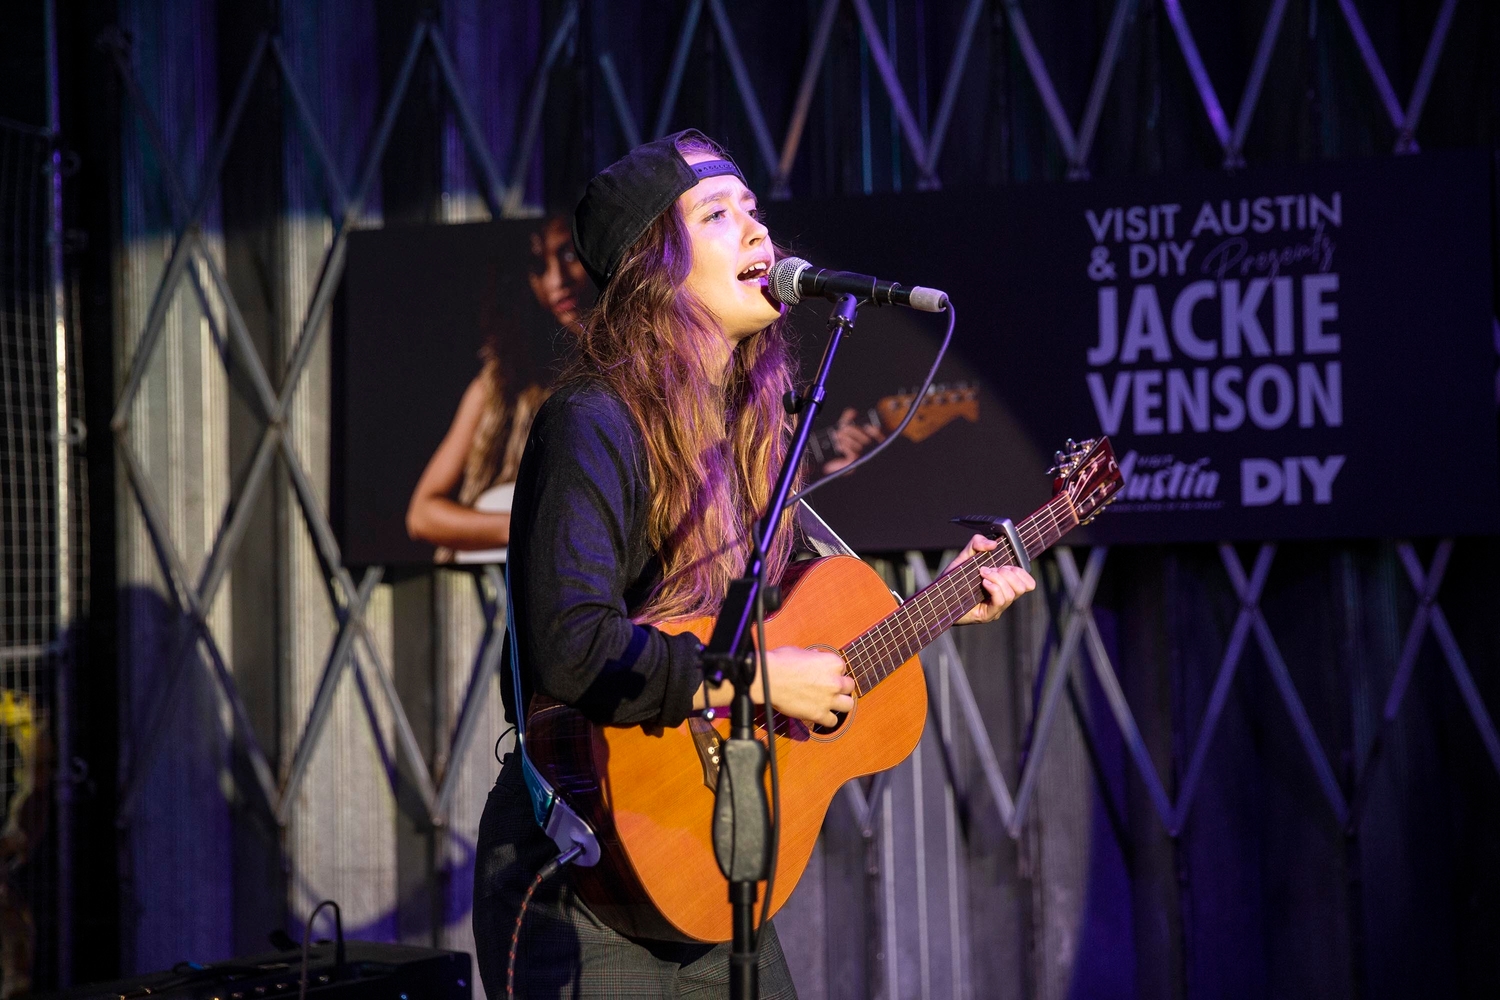 Jackie Venson makes UK live debut at DIY Presents + Visit Austin show